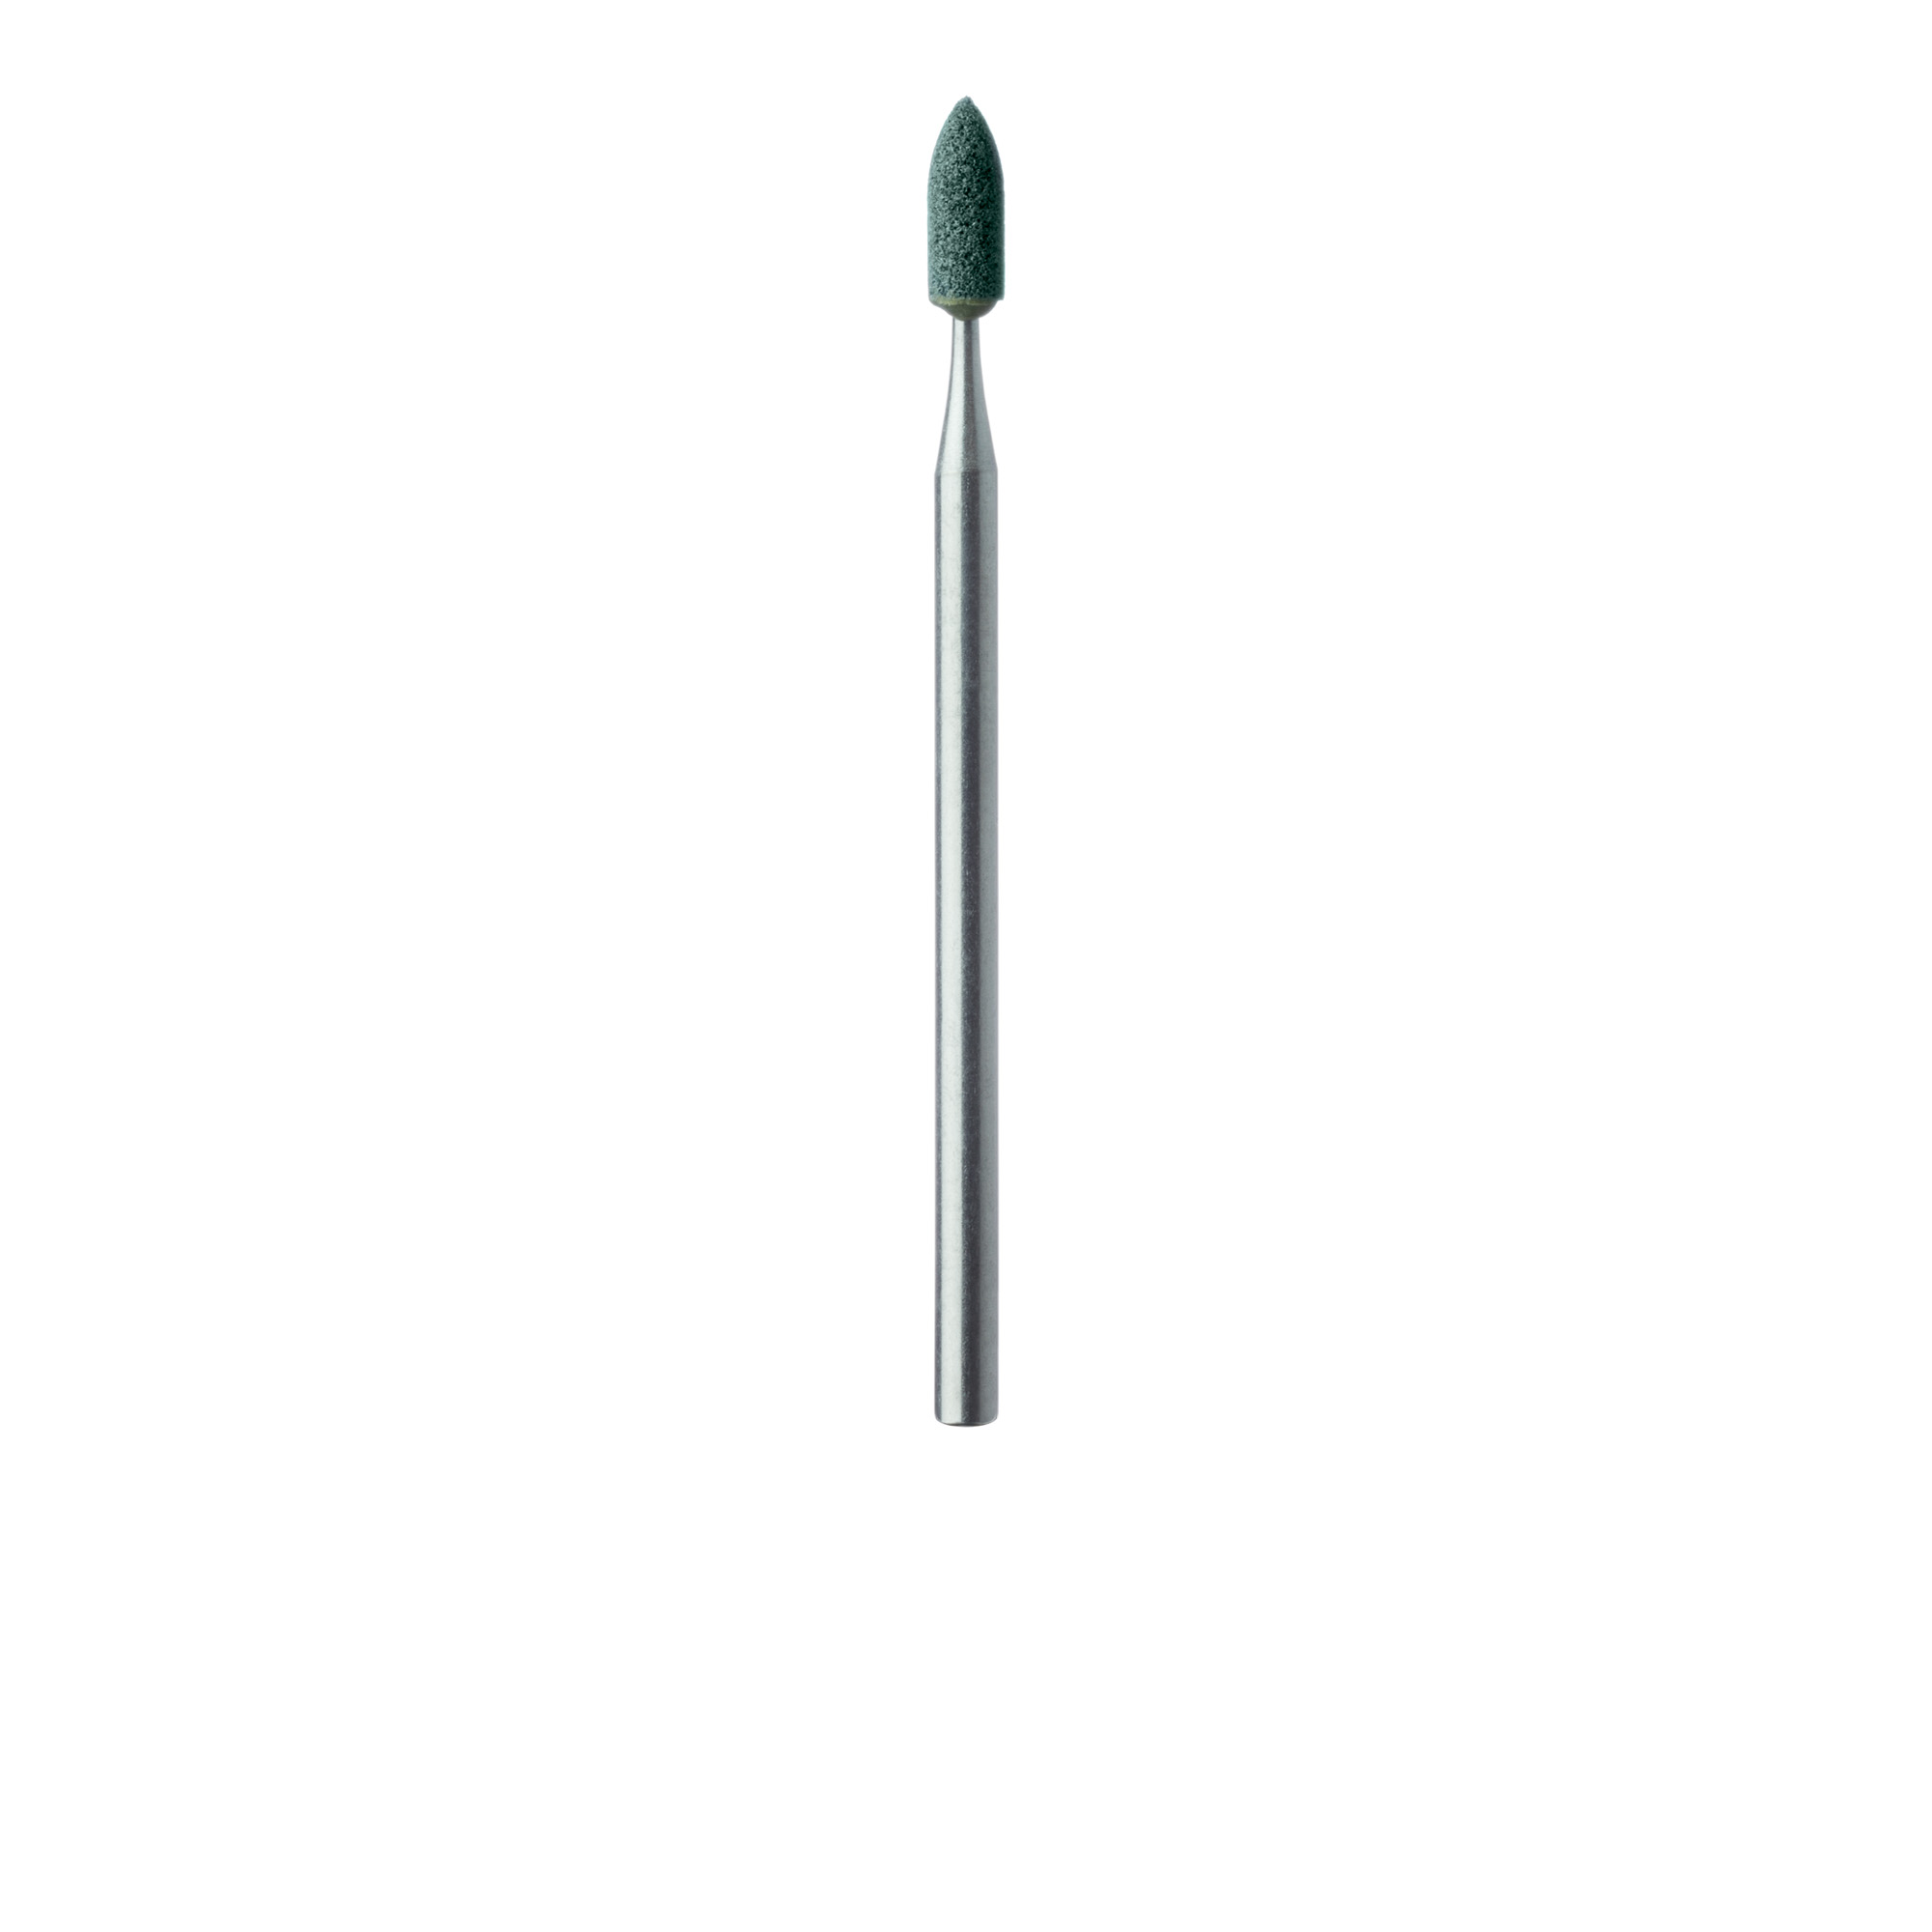 661-025-HP-GRN Abrasive, Green, Nose Cone, 2.5mm Ø, Medium, HP